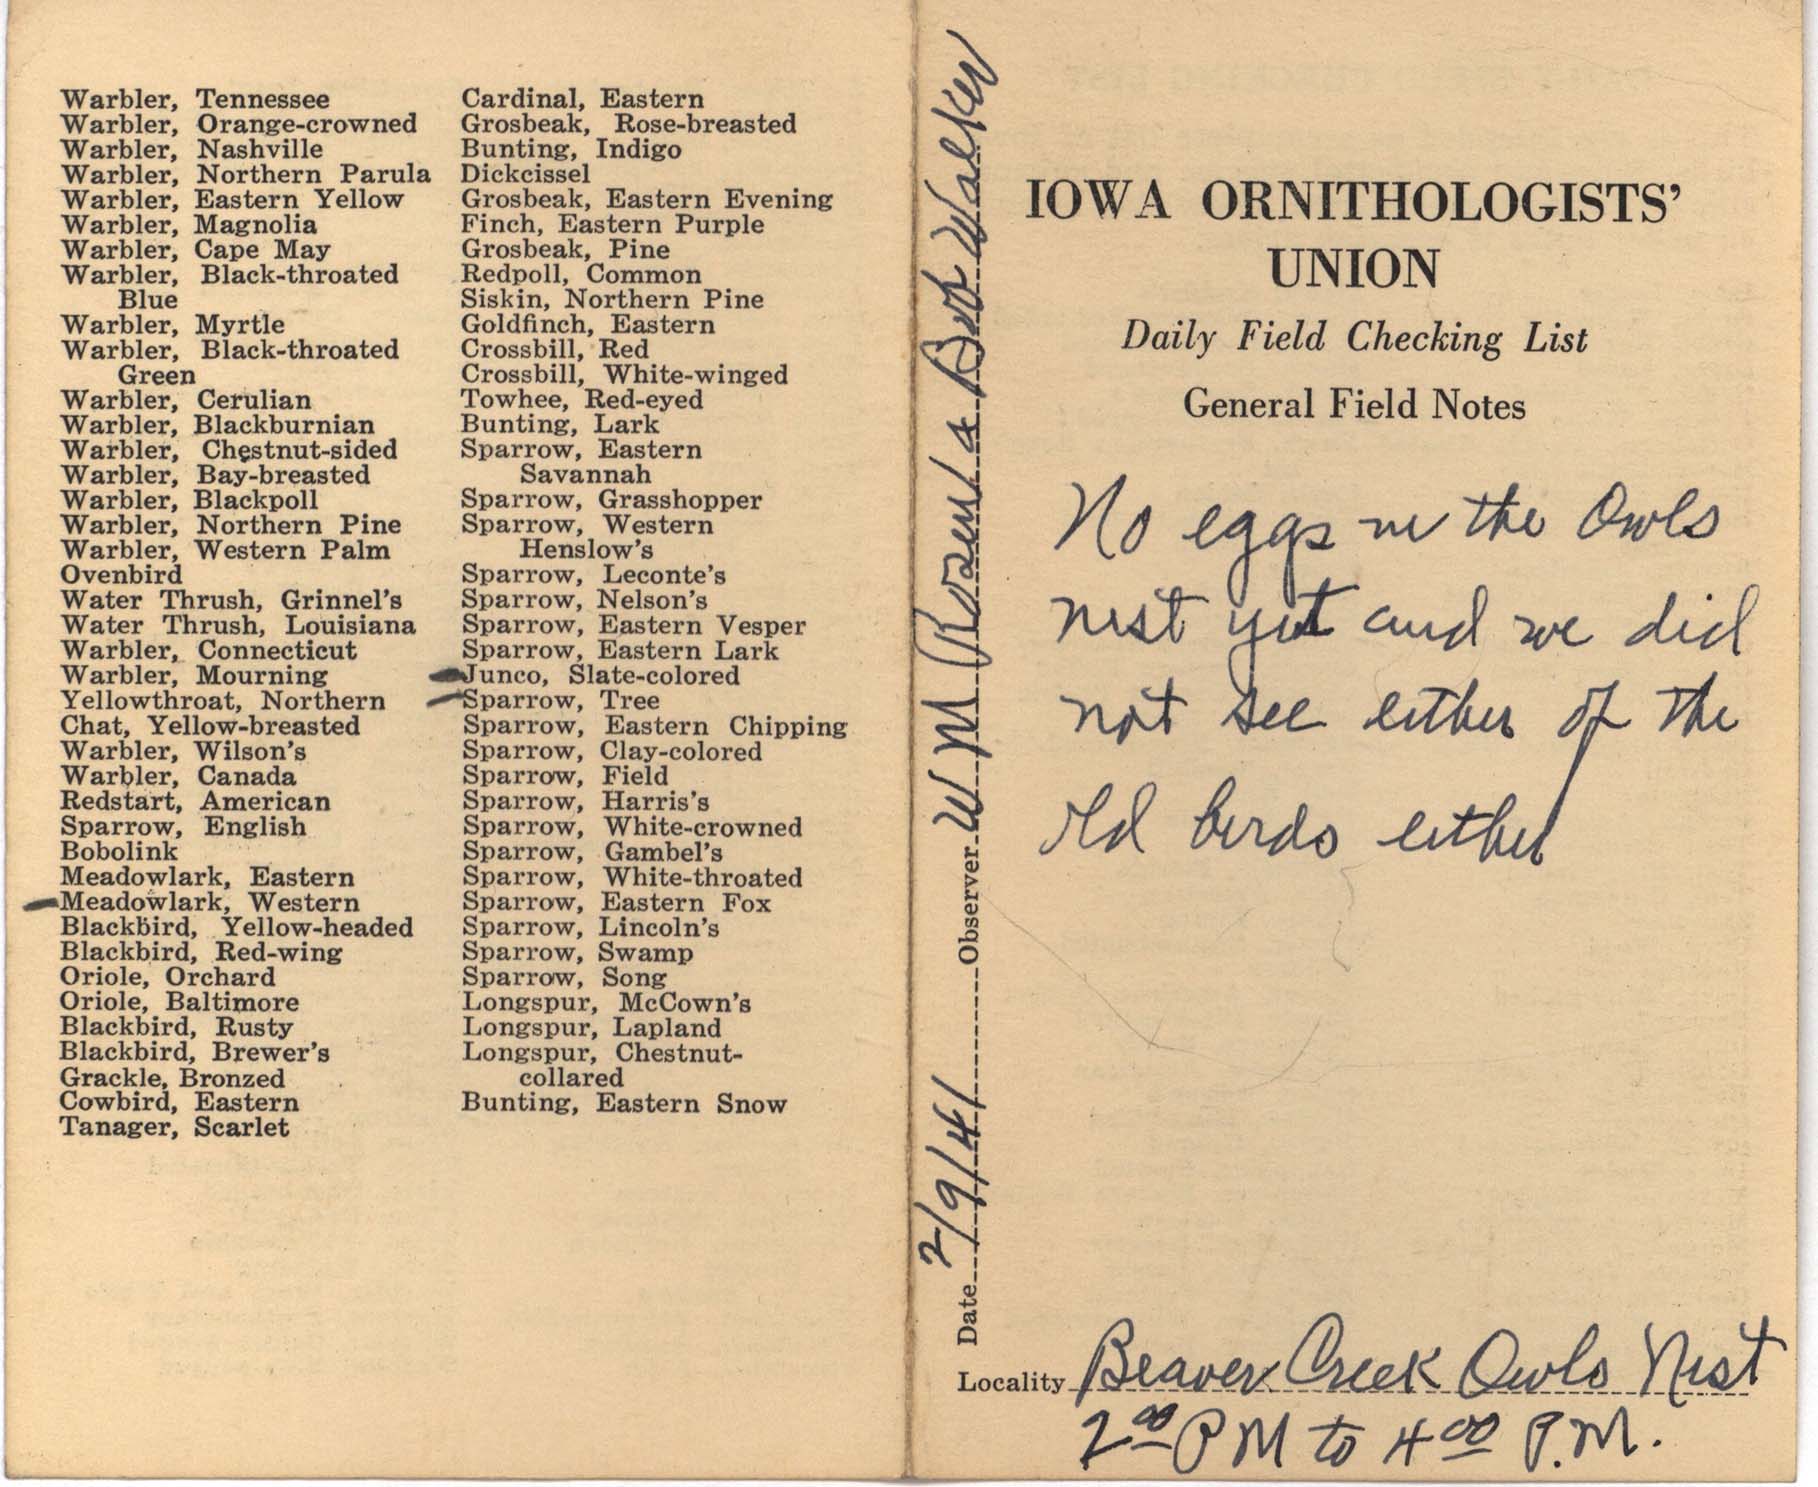 Daily field checking list by Walter Rosene, February 9, 1941